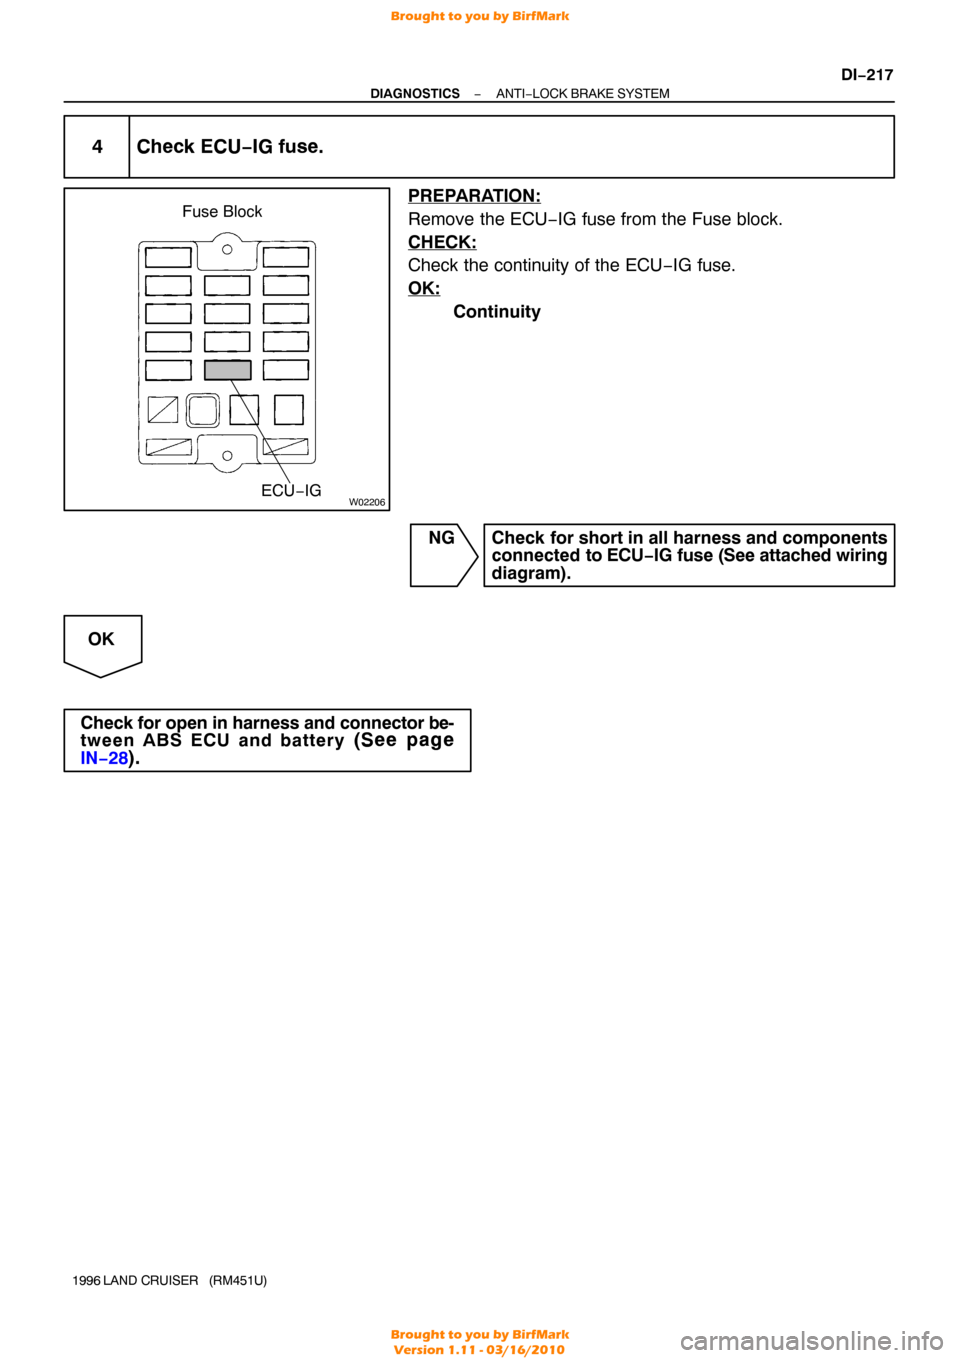 TOYOTA LAND CRUISER 1996 J80 Service Manual W02206
Fuse BlockECU−IG
−
DIAGNOSTICS ANTI−LOCK BRAKE SYSTEM
DI−217
1996 LAND  CRUISER   (RM451U)
4 Check ECU −IG fuse.
PREPARATION:
Remove the ECU−IG fuse from the Fuse block.
CHECK:
Chec